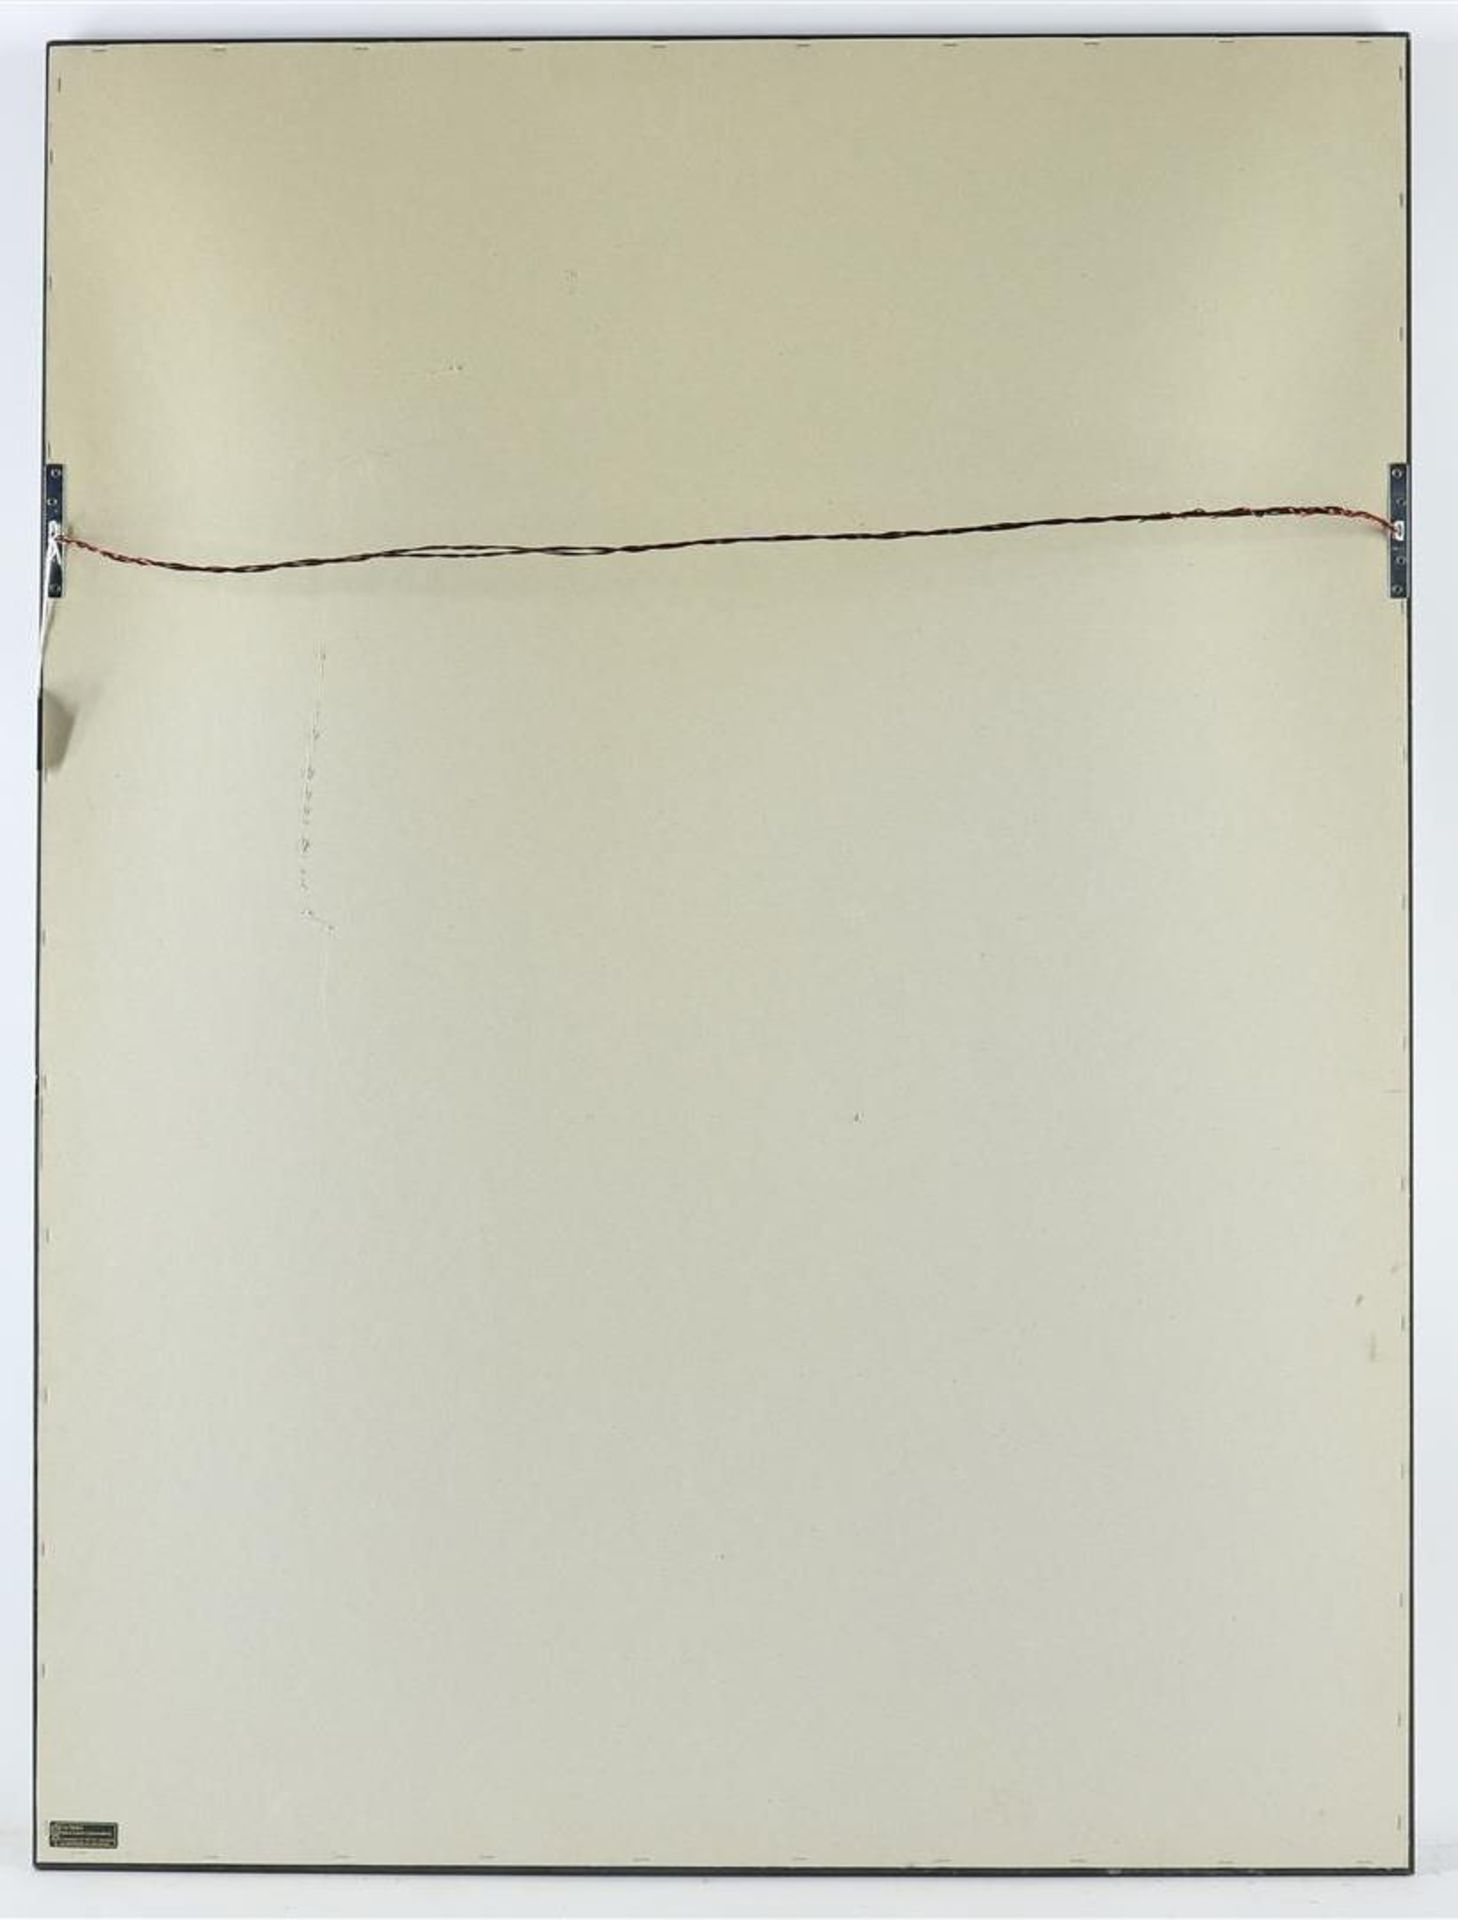 Karel Appel (1921-2006) 'Cool Hand Luke', signed lower right, screen print 5/100, 102 x 70 cm. - Image 4 of 4